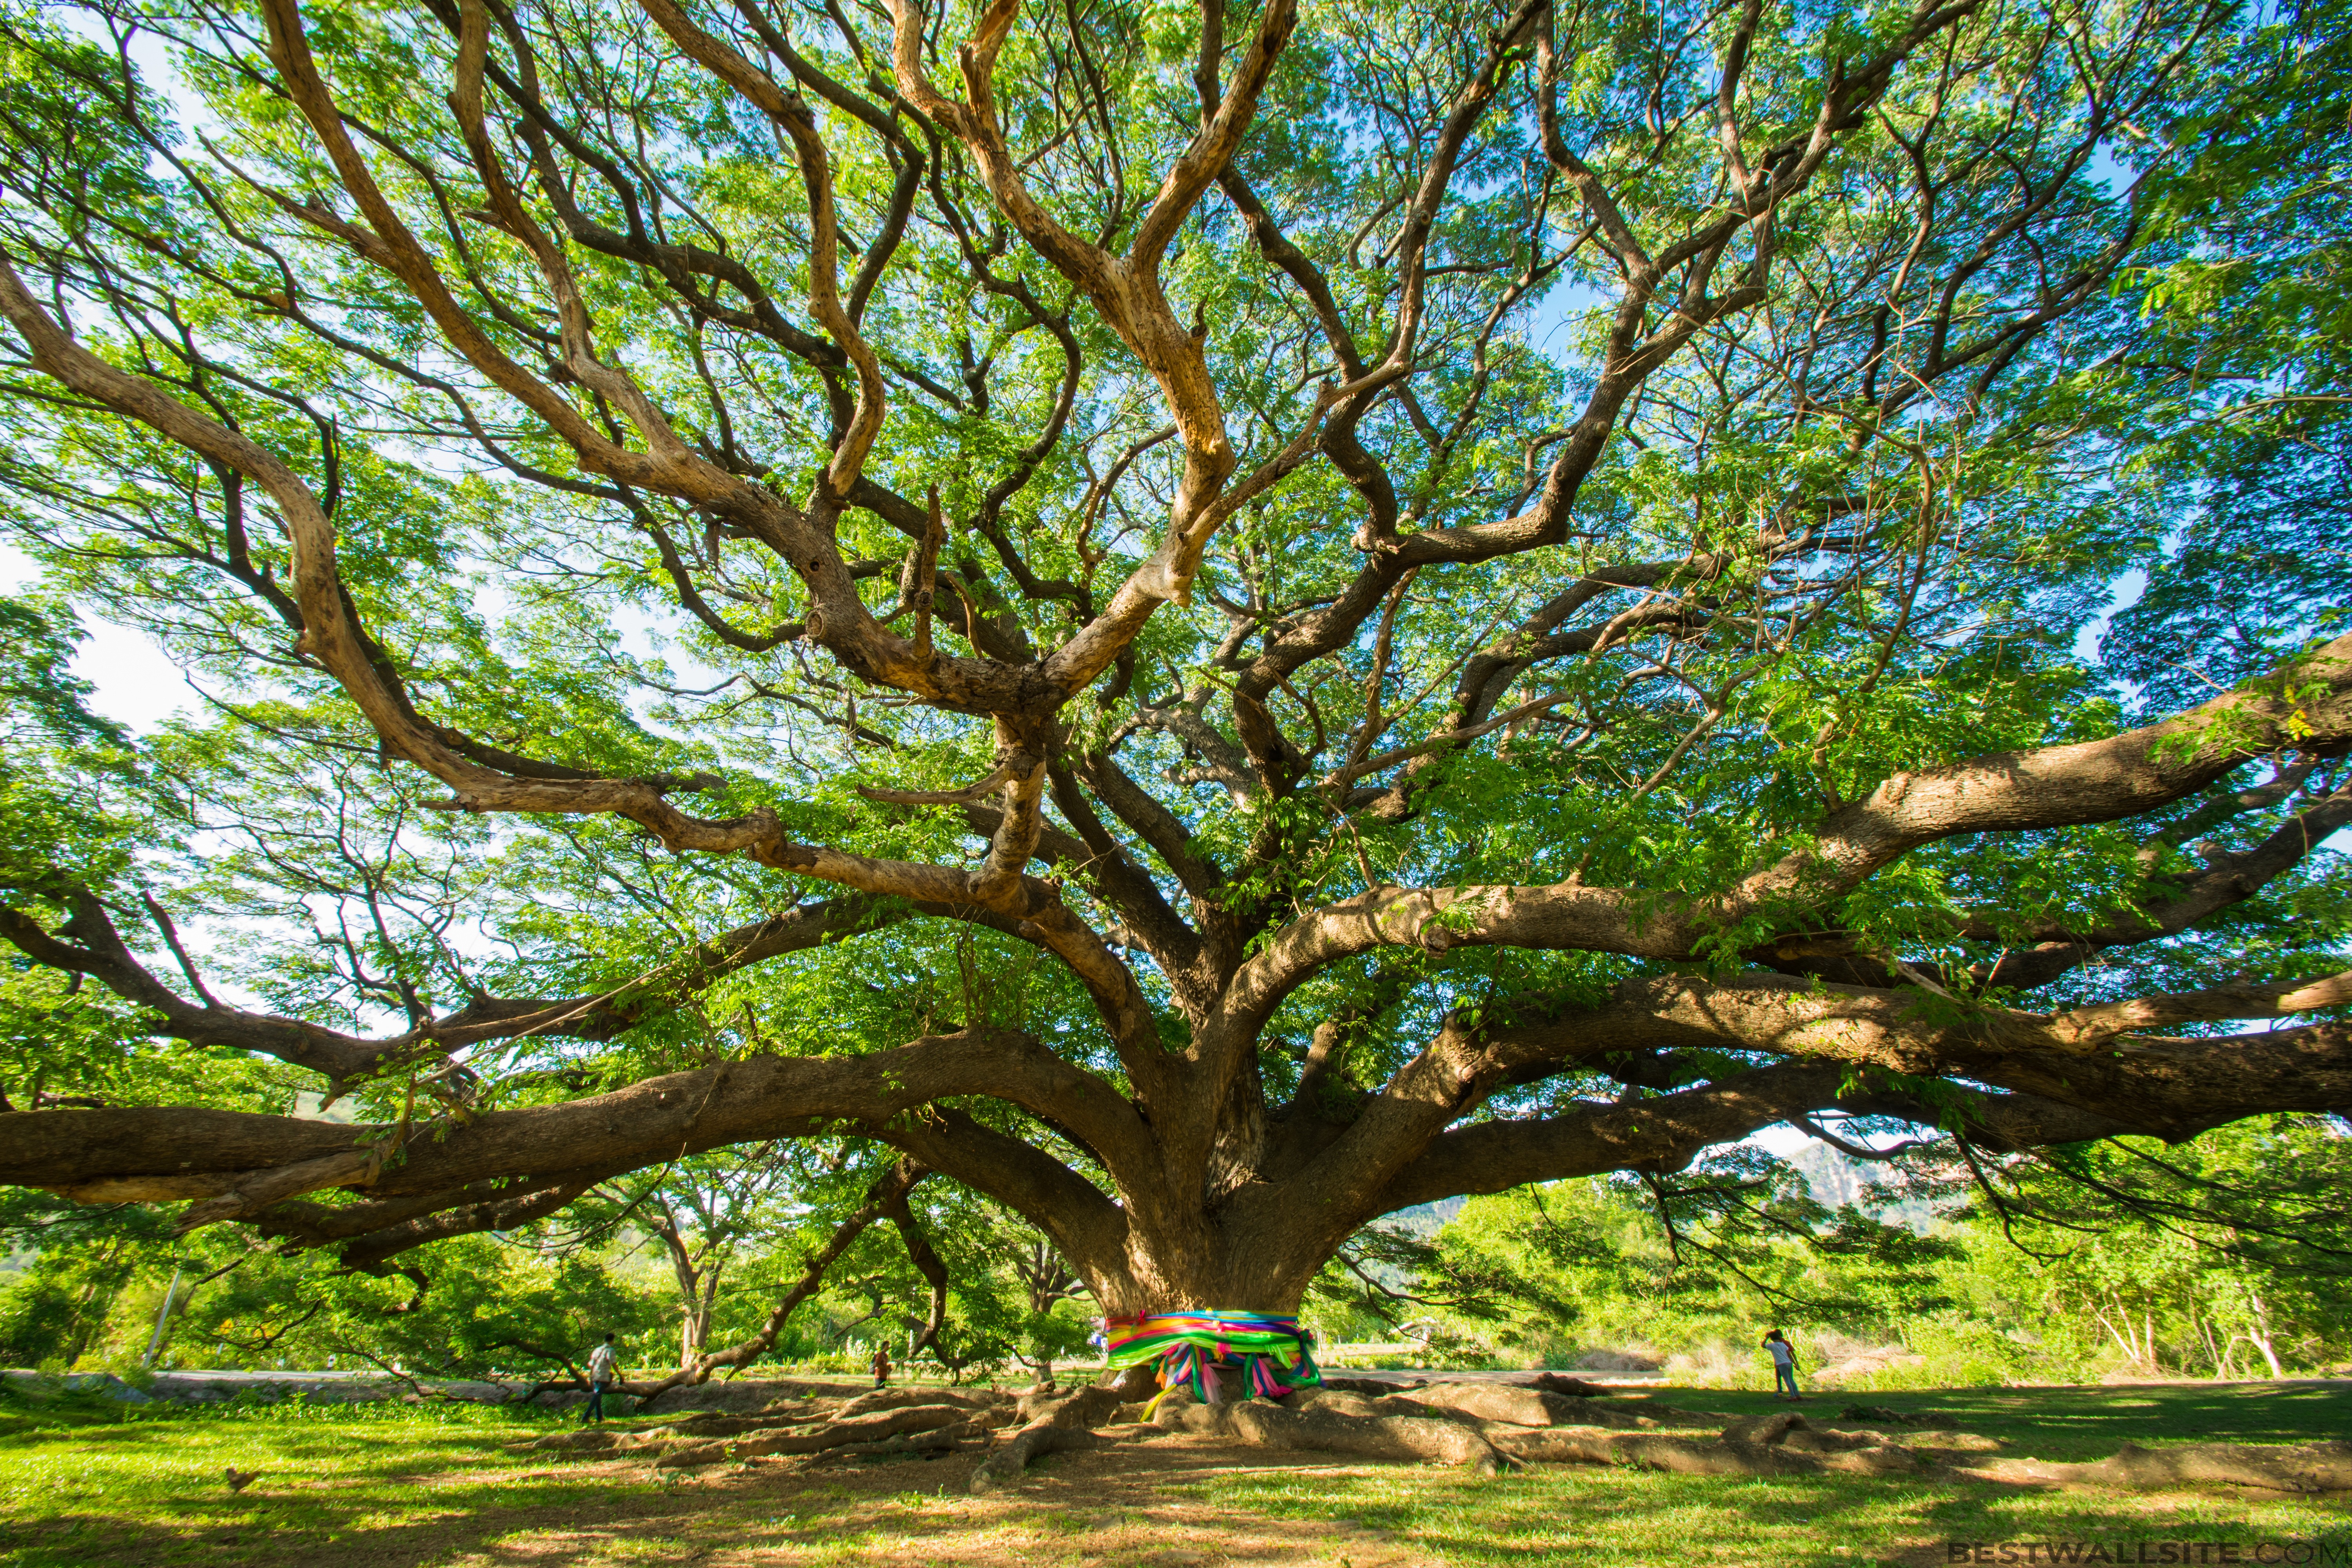 Beautiful Big Tree | BestWallSite.com